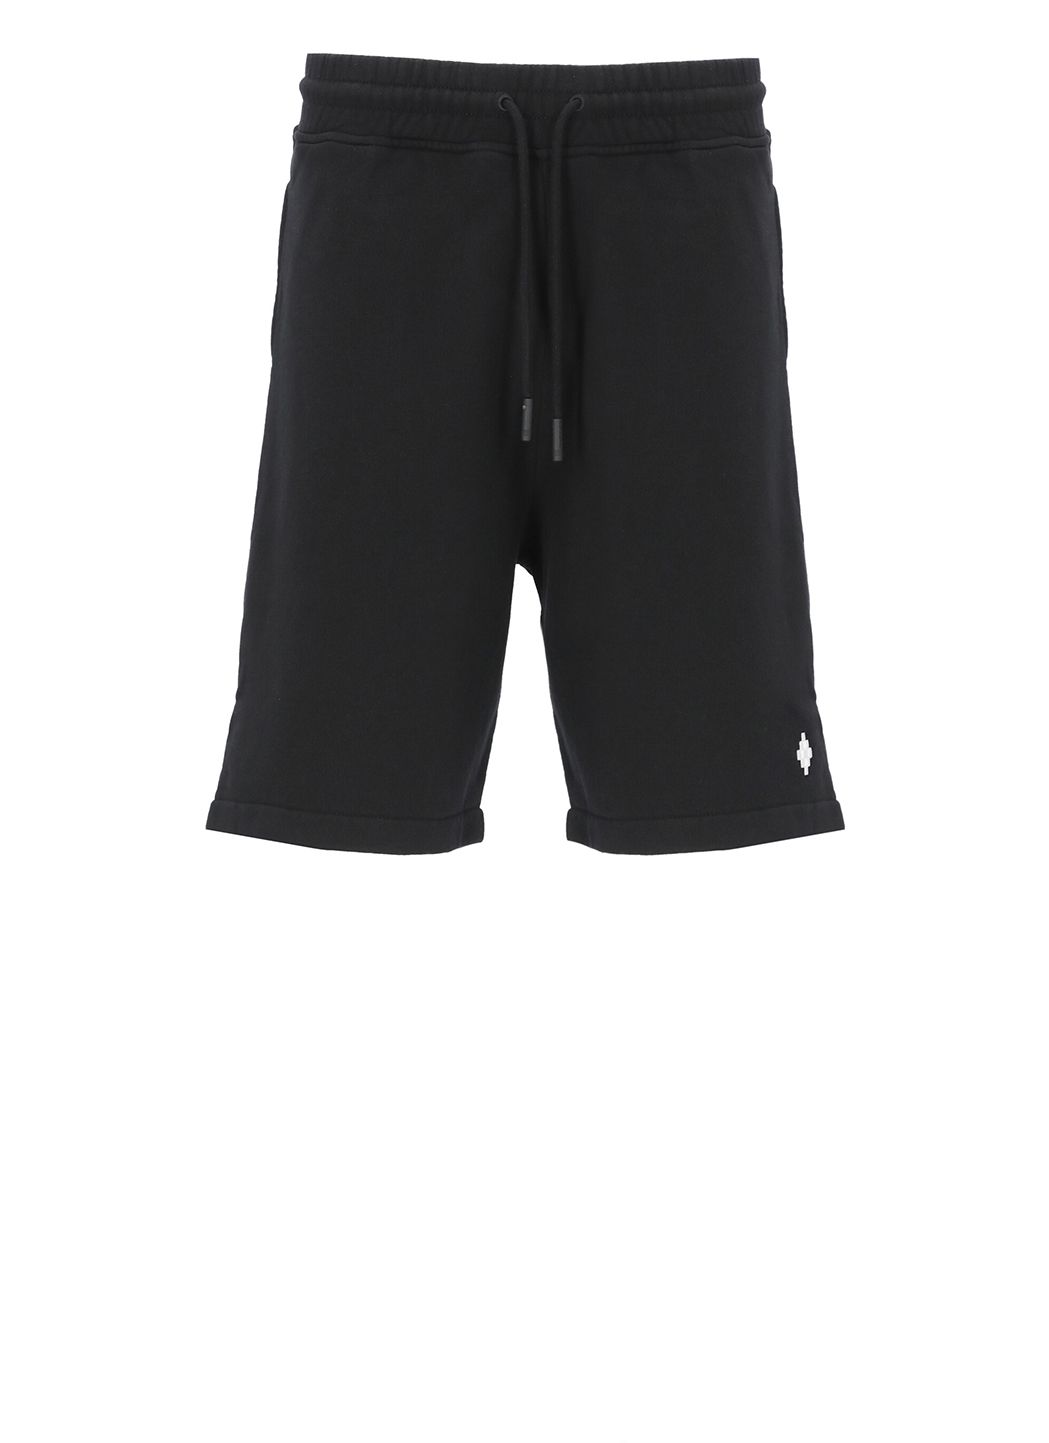 Cross Basket bermuda shorts